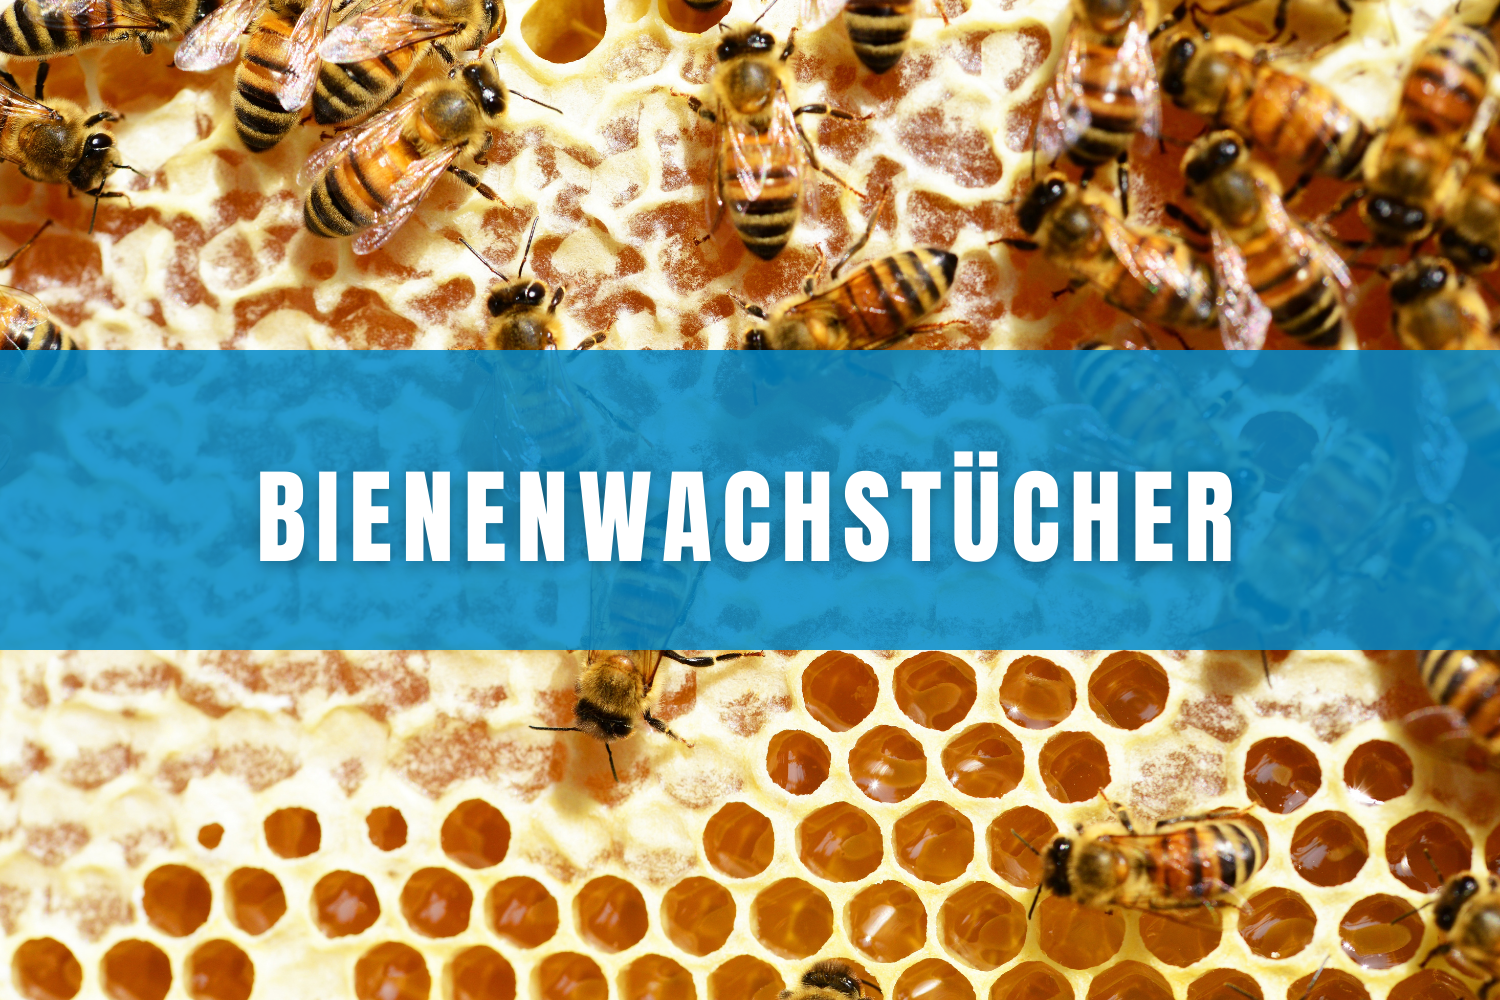 Bienenwachstücher_(2)